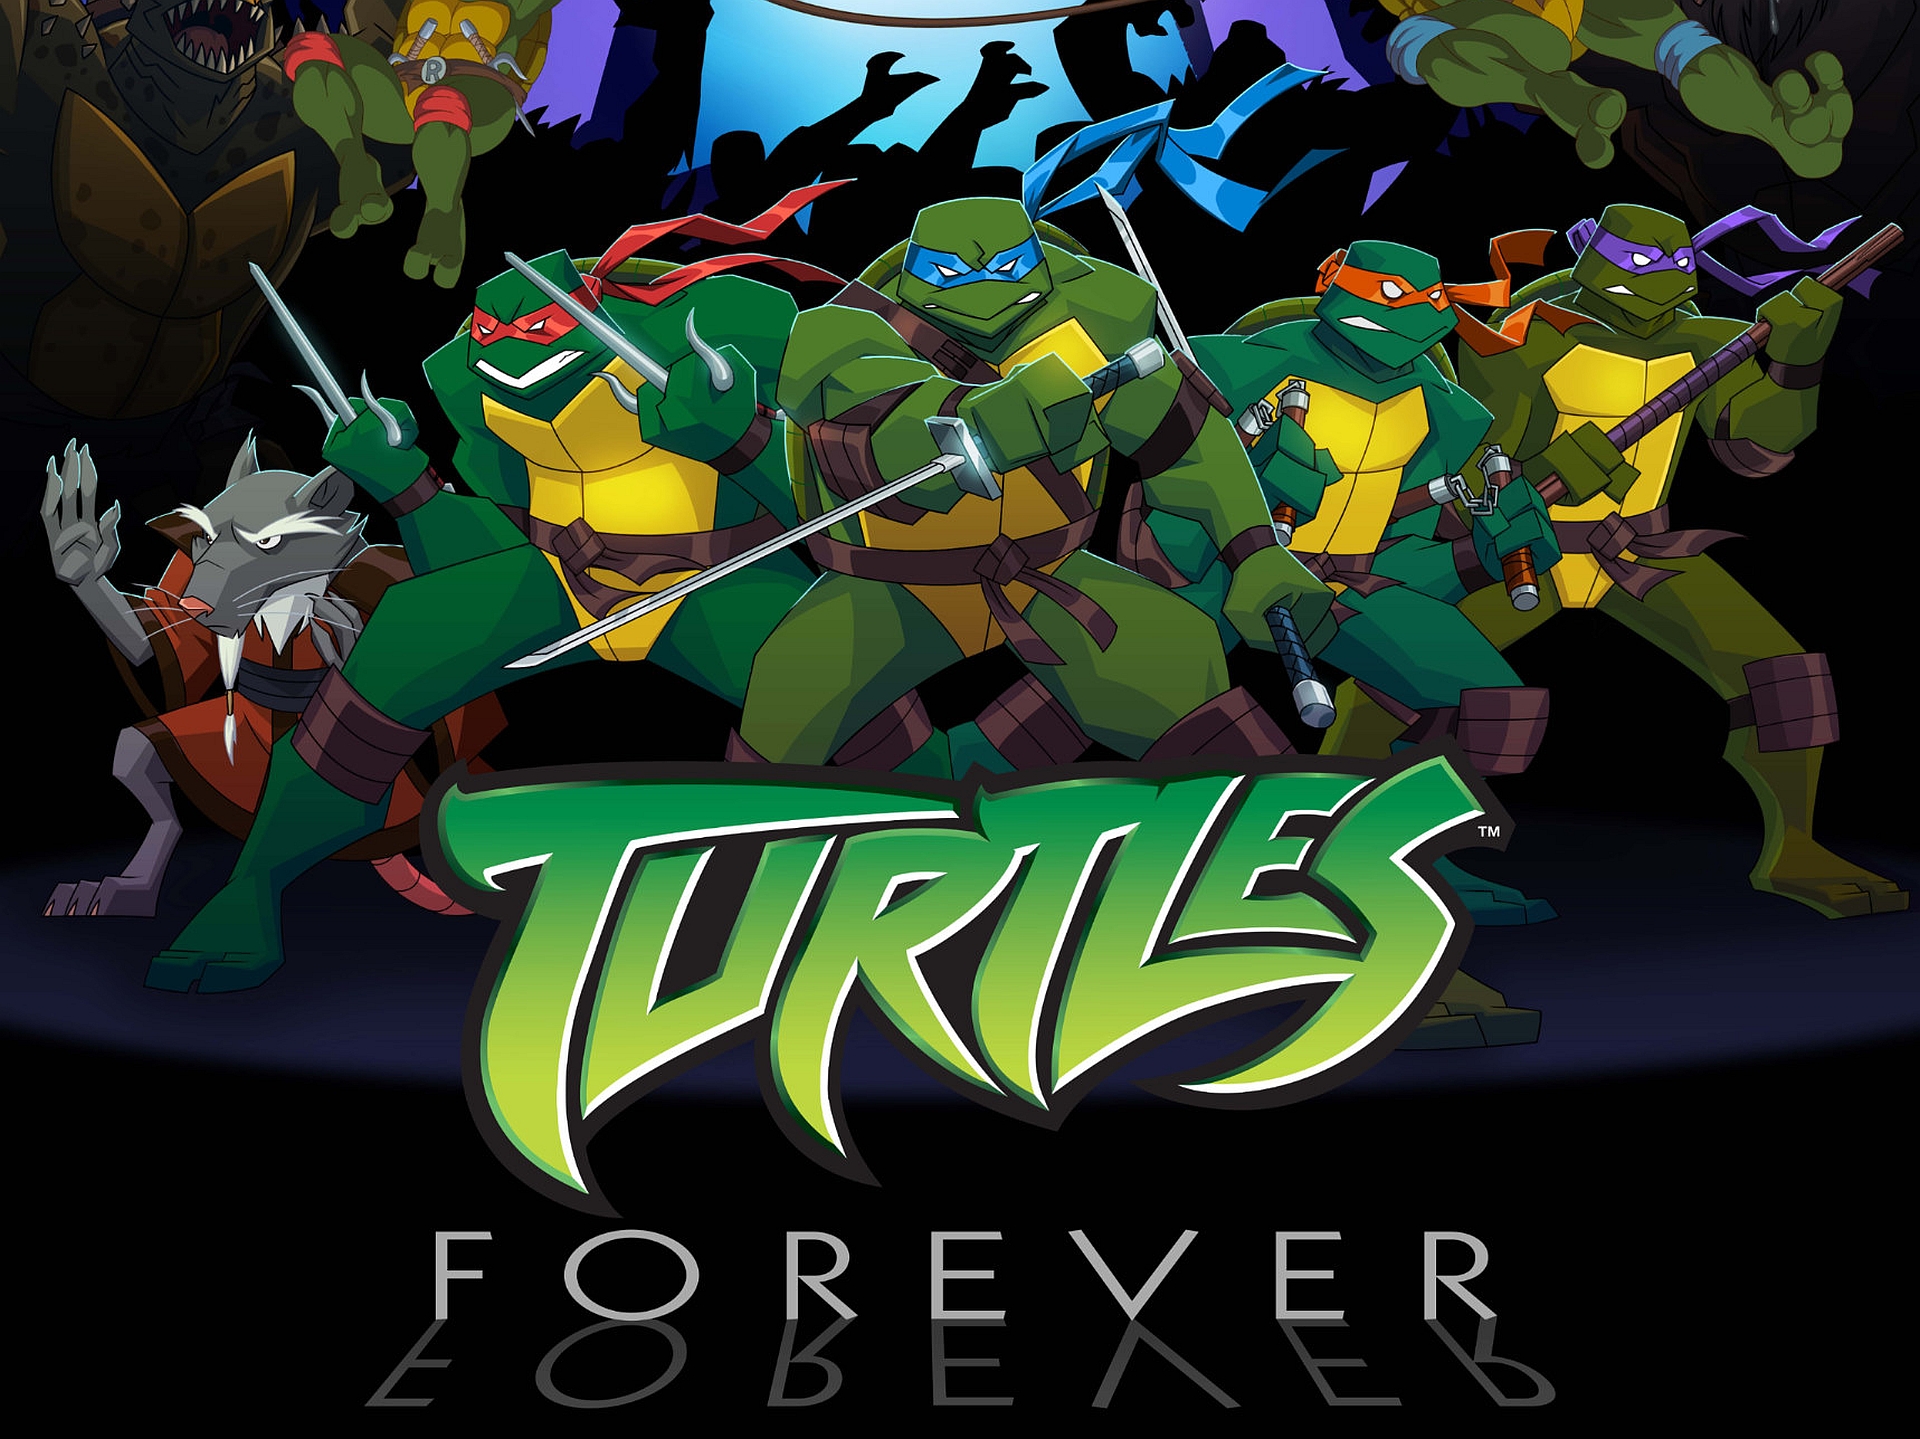 Teenage Mutant Ninja Turtles Forever Puter Wallpaper Desktop